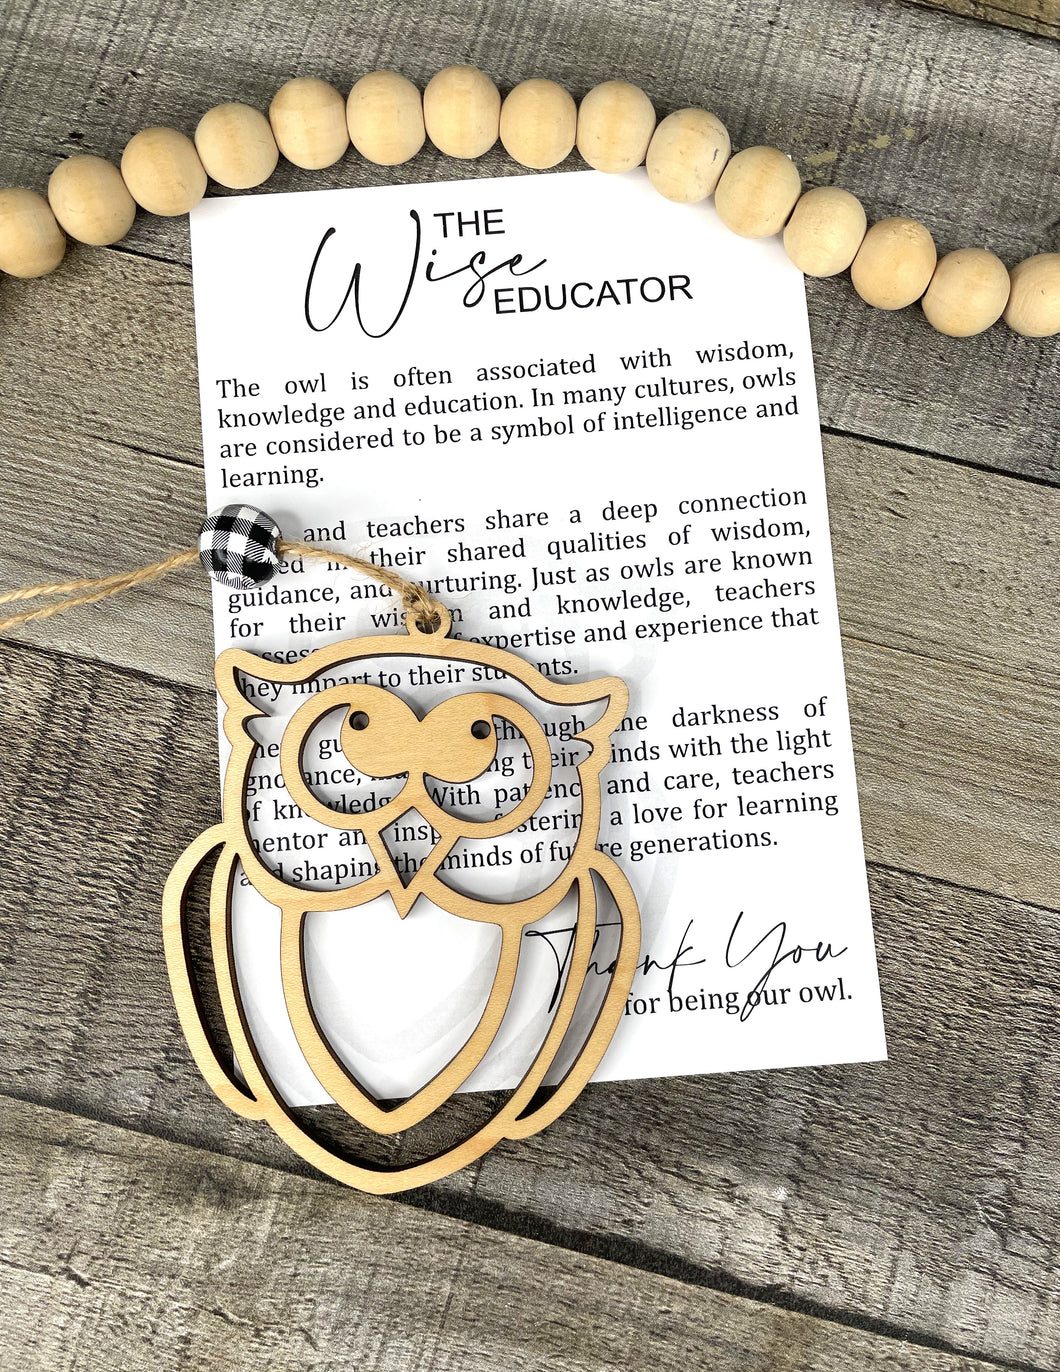 OWL ORNAMENT -- WISE EDUCATOR/TEACHER